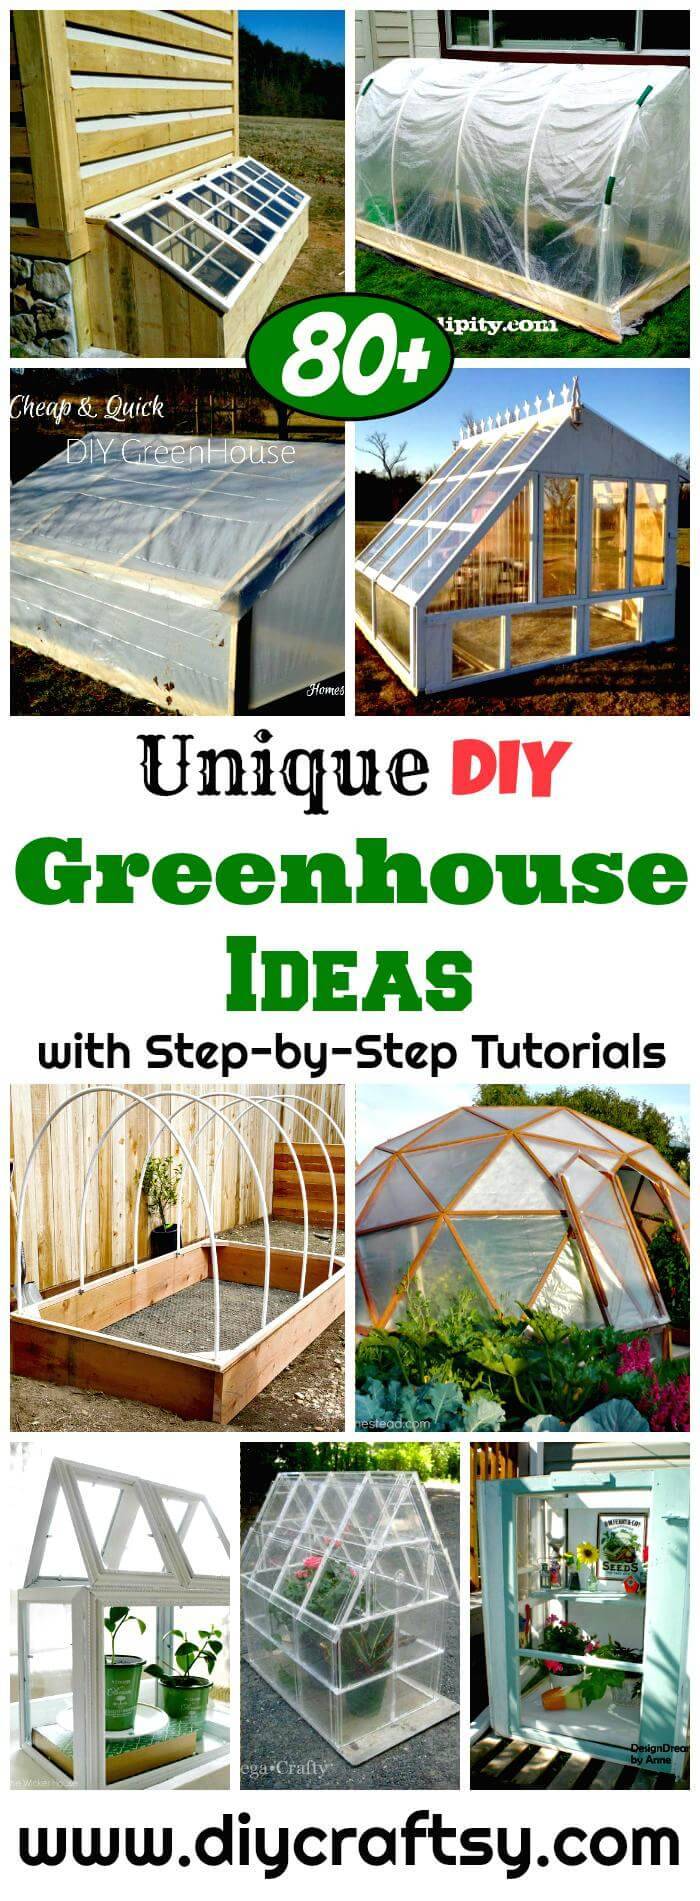 DIY Greenhouse Ideas